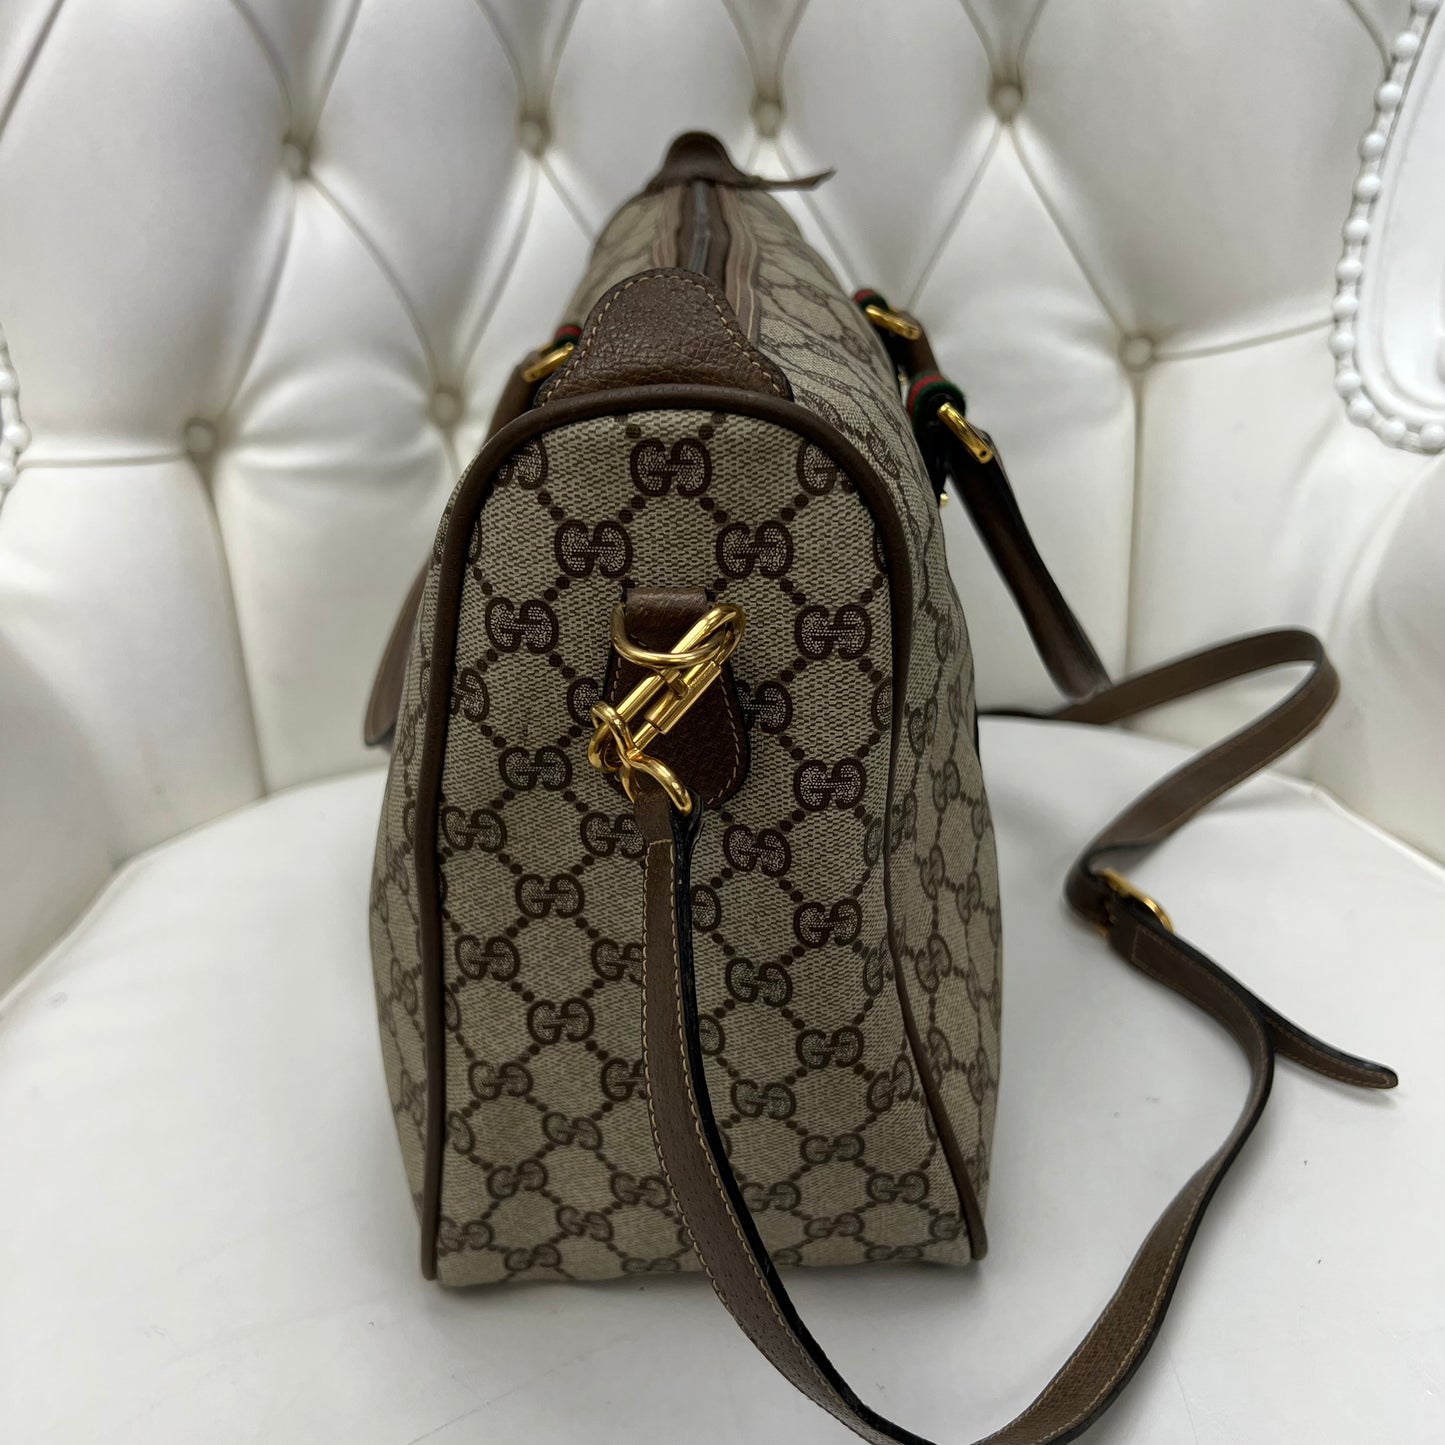 Gucci XL Boston Travel Bag